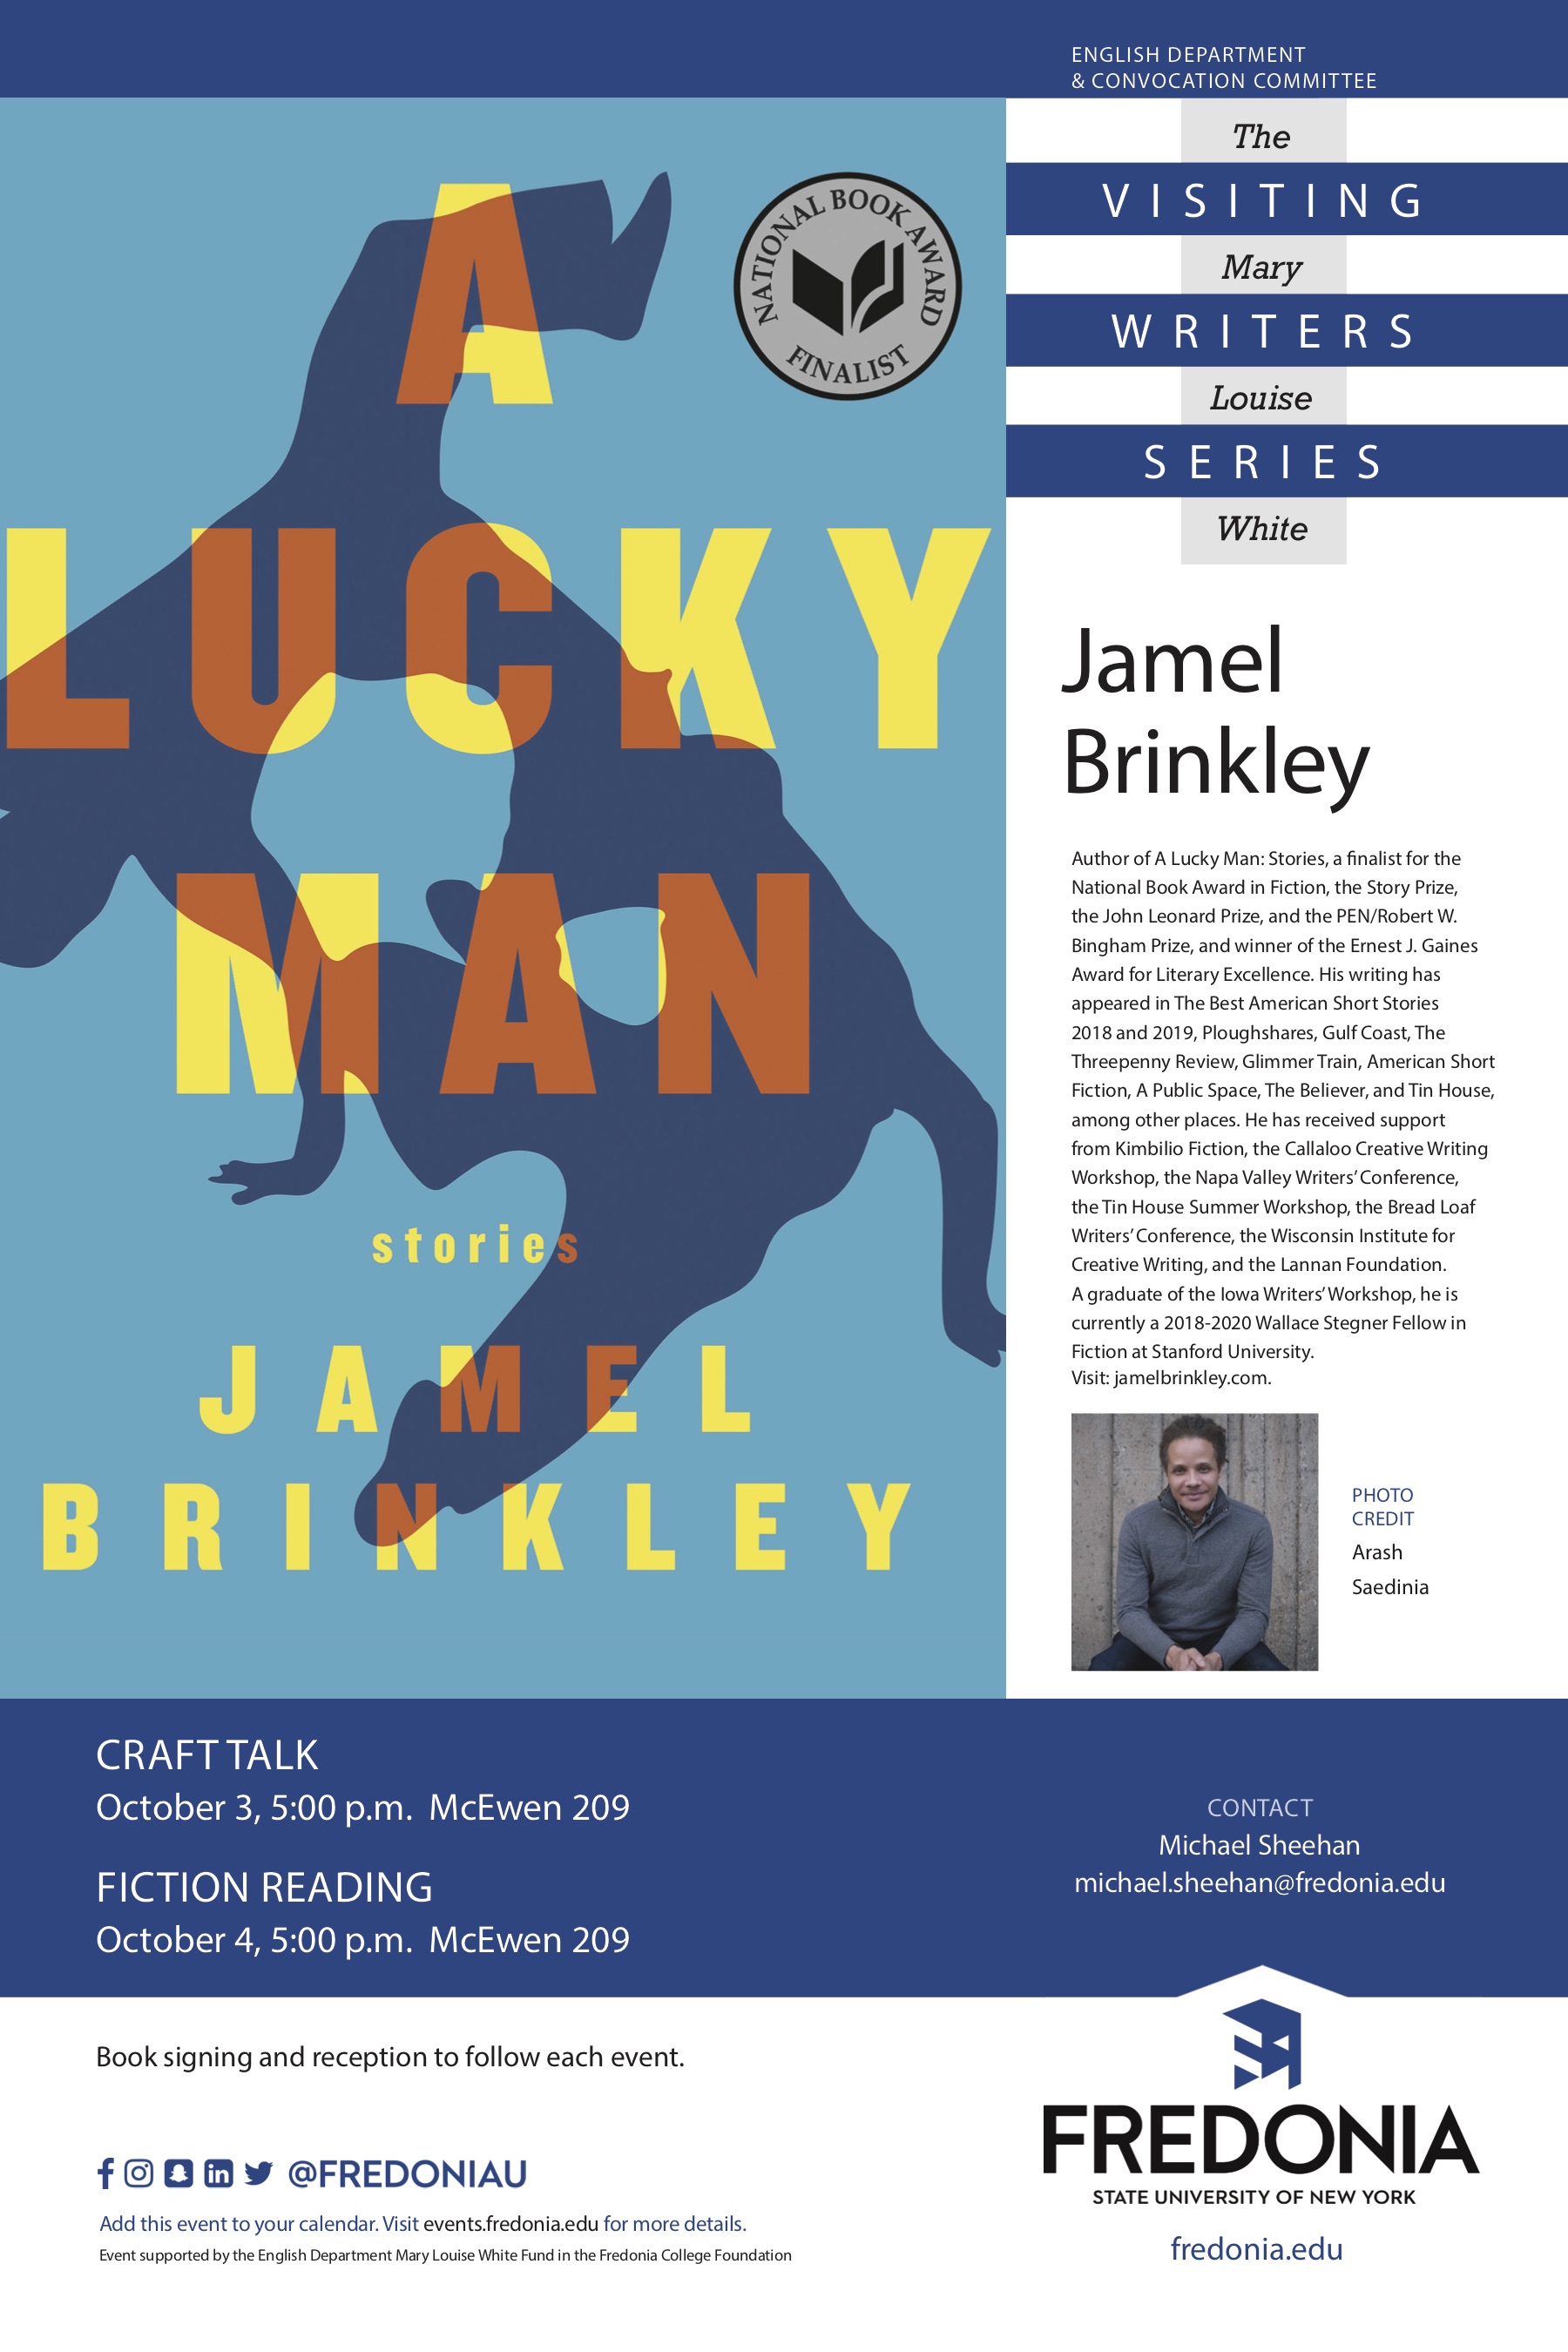 Jamel Brinkley, Fall 2019 MLW Visiting Writer